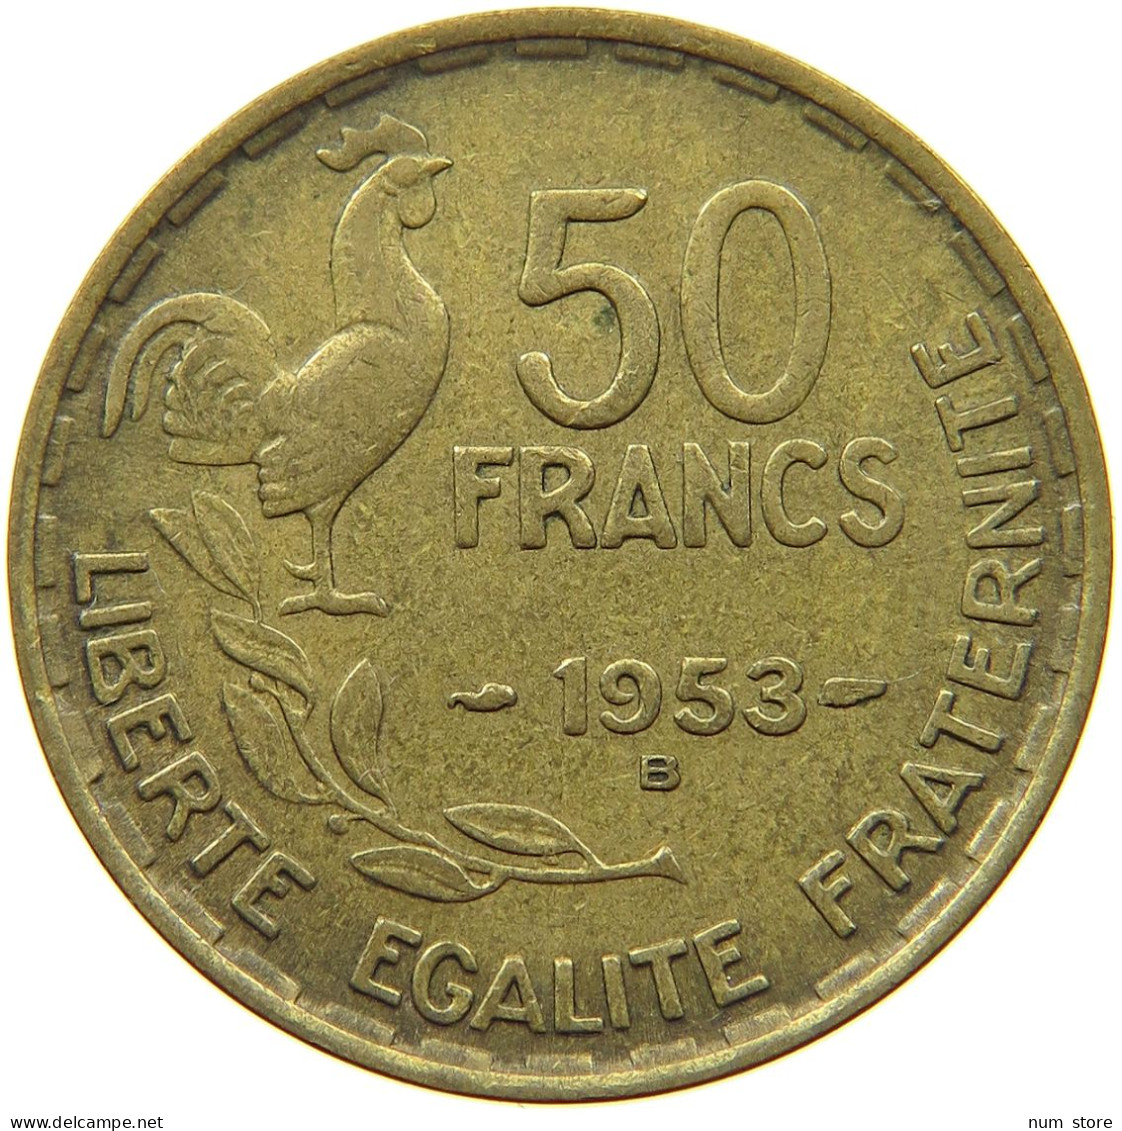 FRANCE 50 FRANCS 1953 B #s066 0249 - 50 Francs